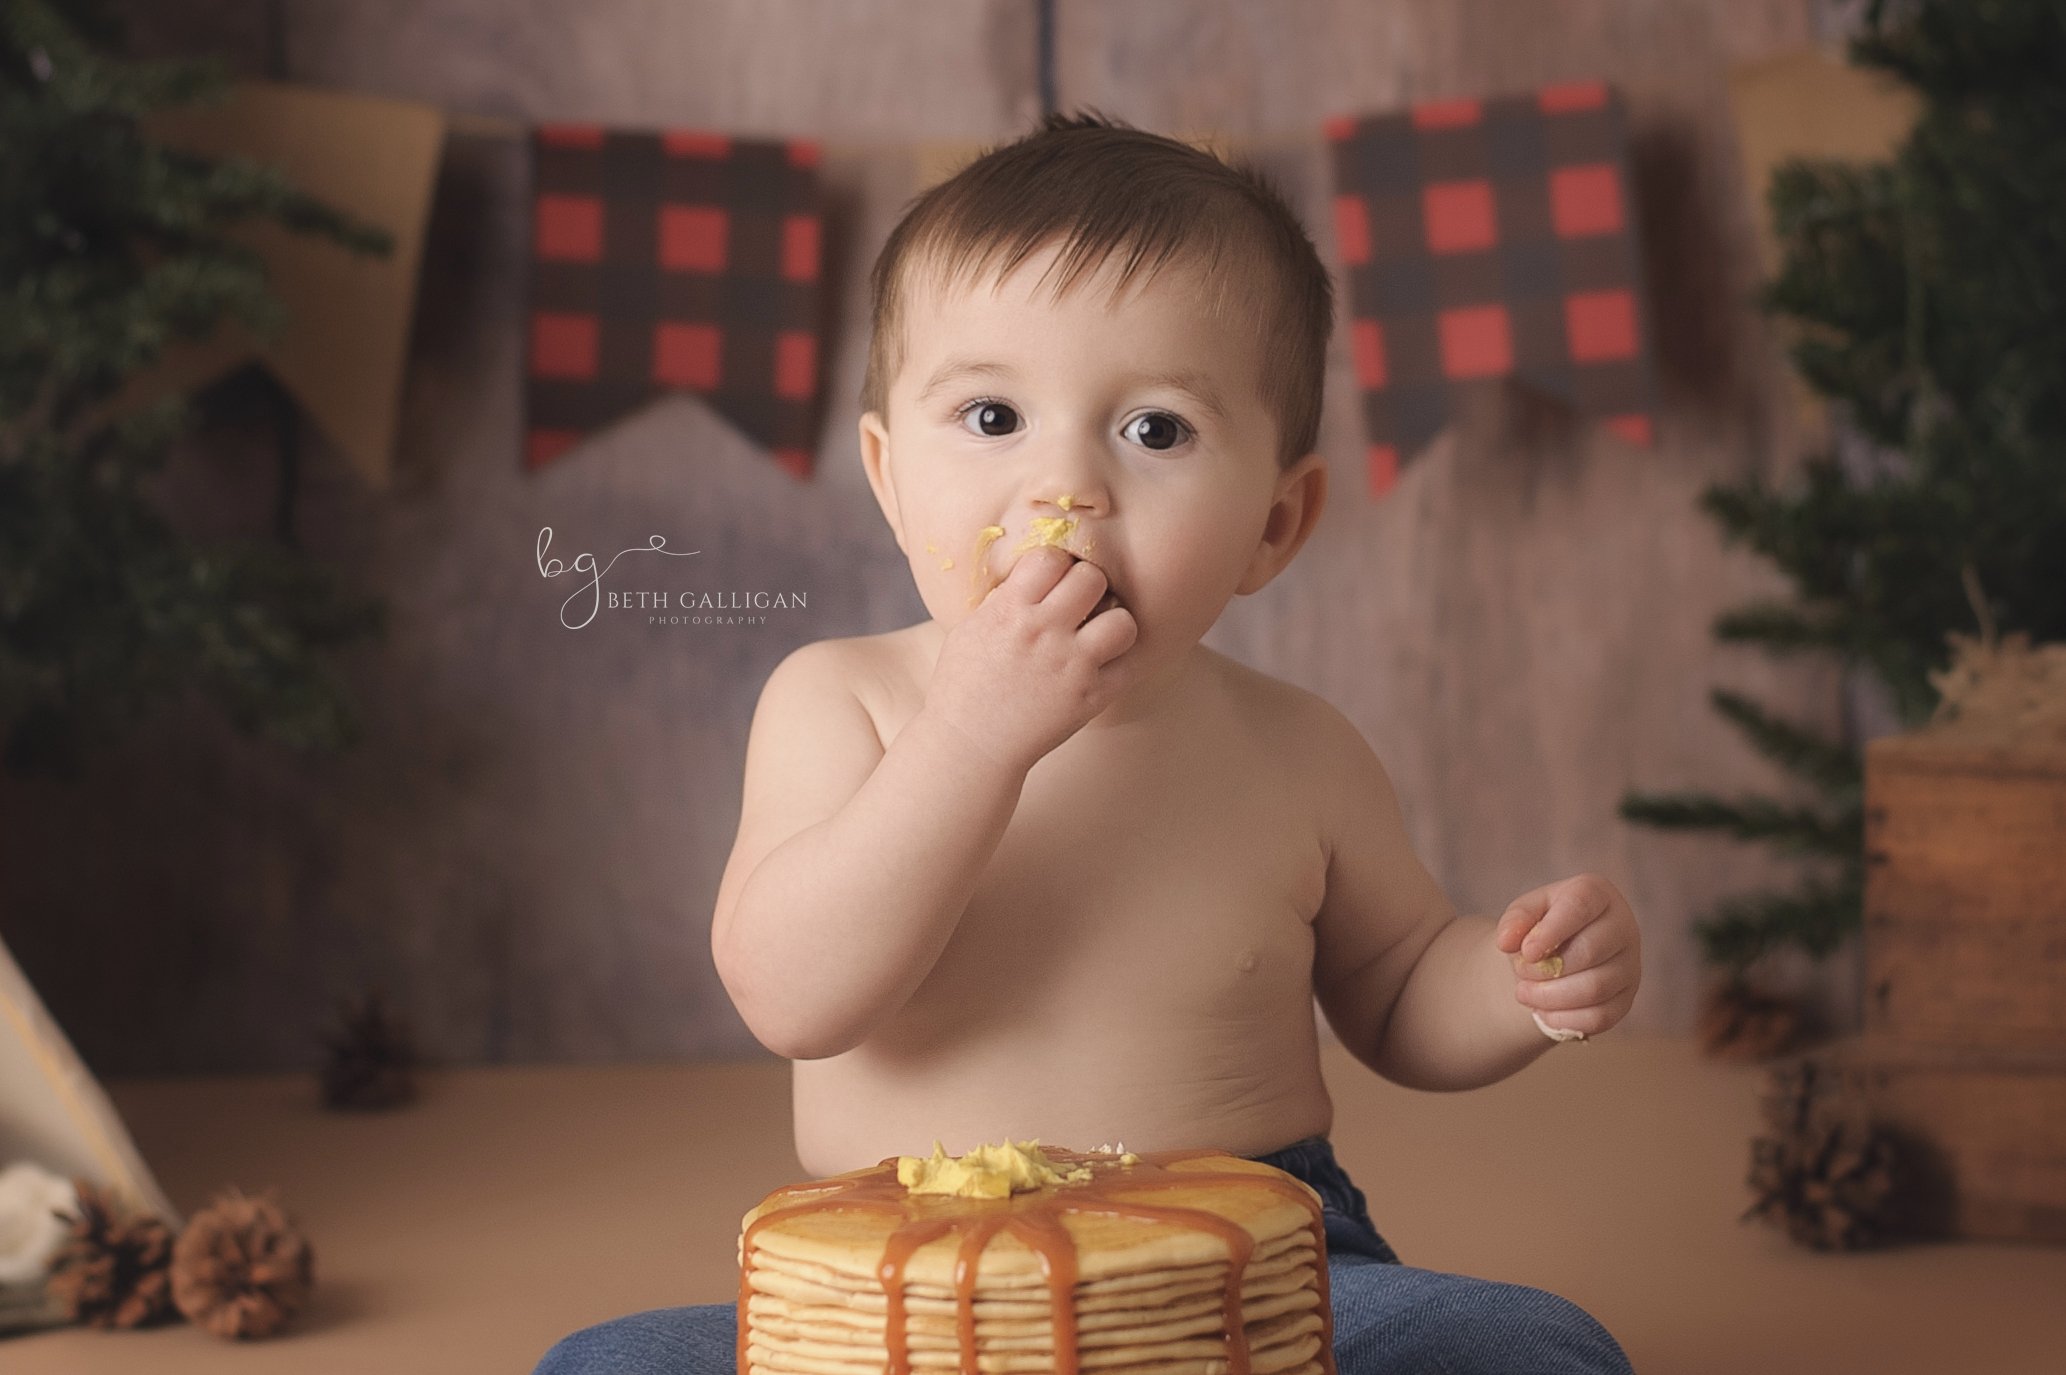 Smash Cake Recipe Idea Baby Boy's First Birthday - Cooking LSL